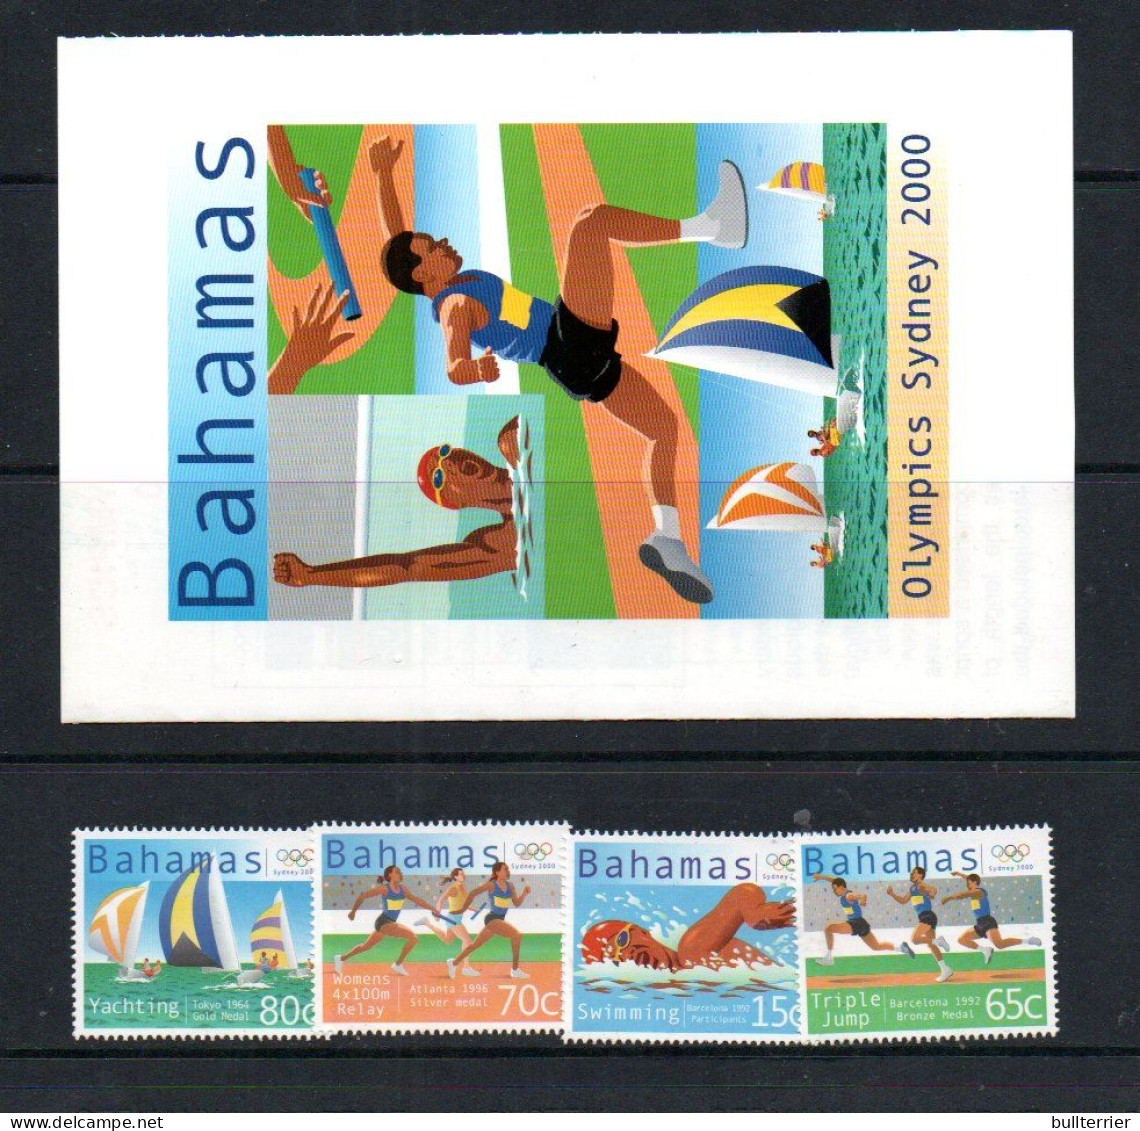 OLYMPICS -  BAHAMAS  - 2000-Sydney Olympics Set Of 4 + PUBLICITY Sheet  Mint Never Hinged - Sommer 2000: Sydney